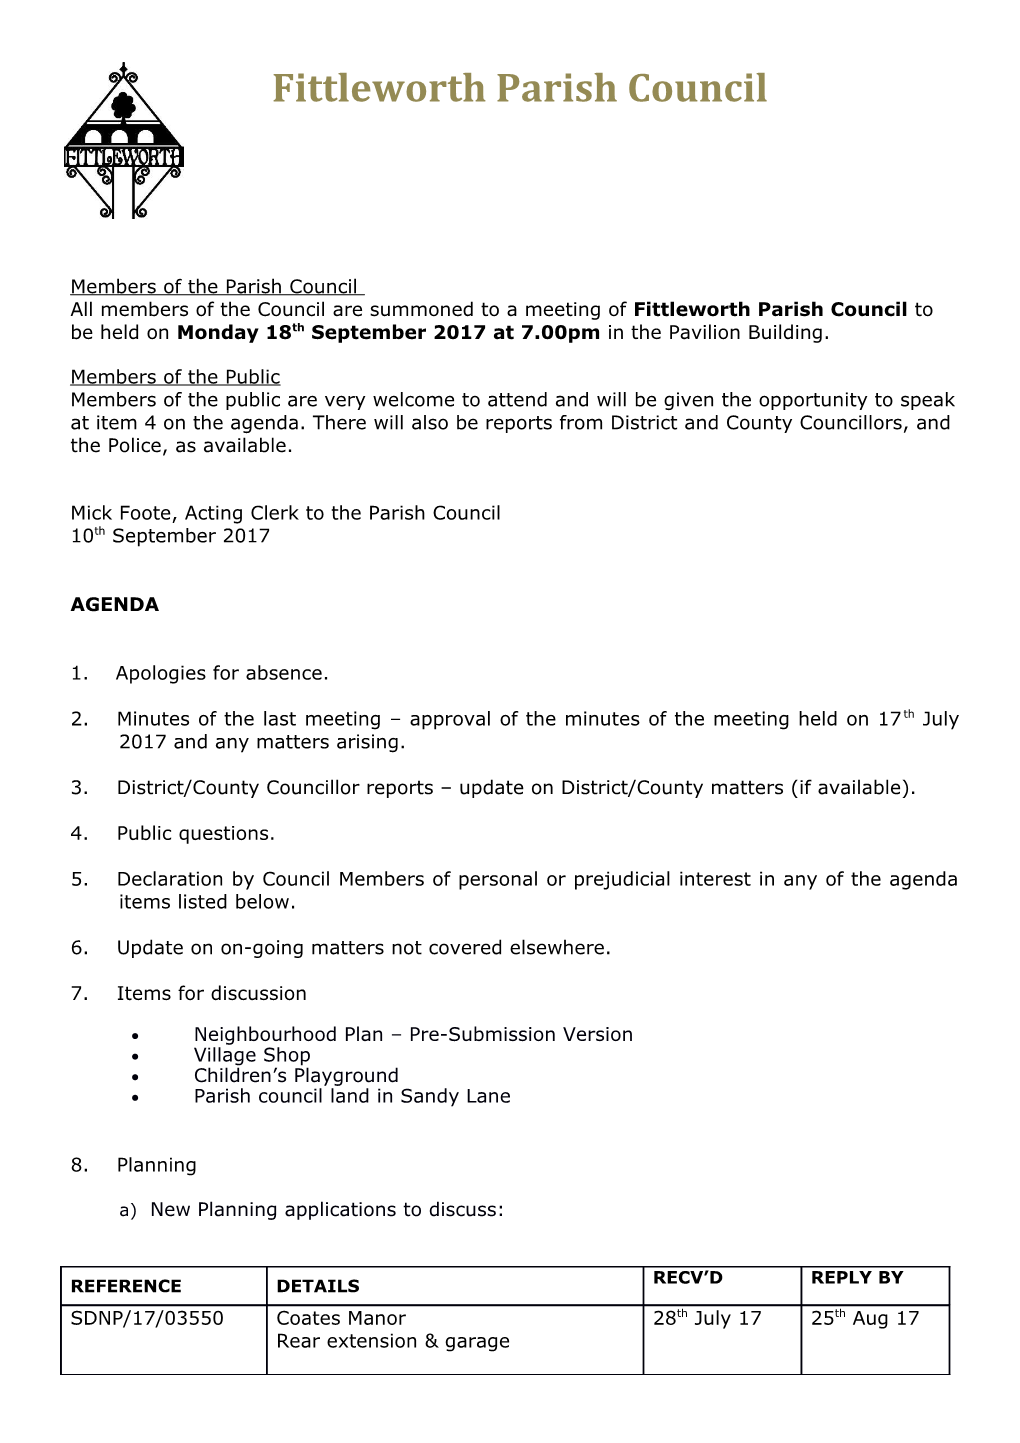 Copy of Agenda Feb 2015